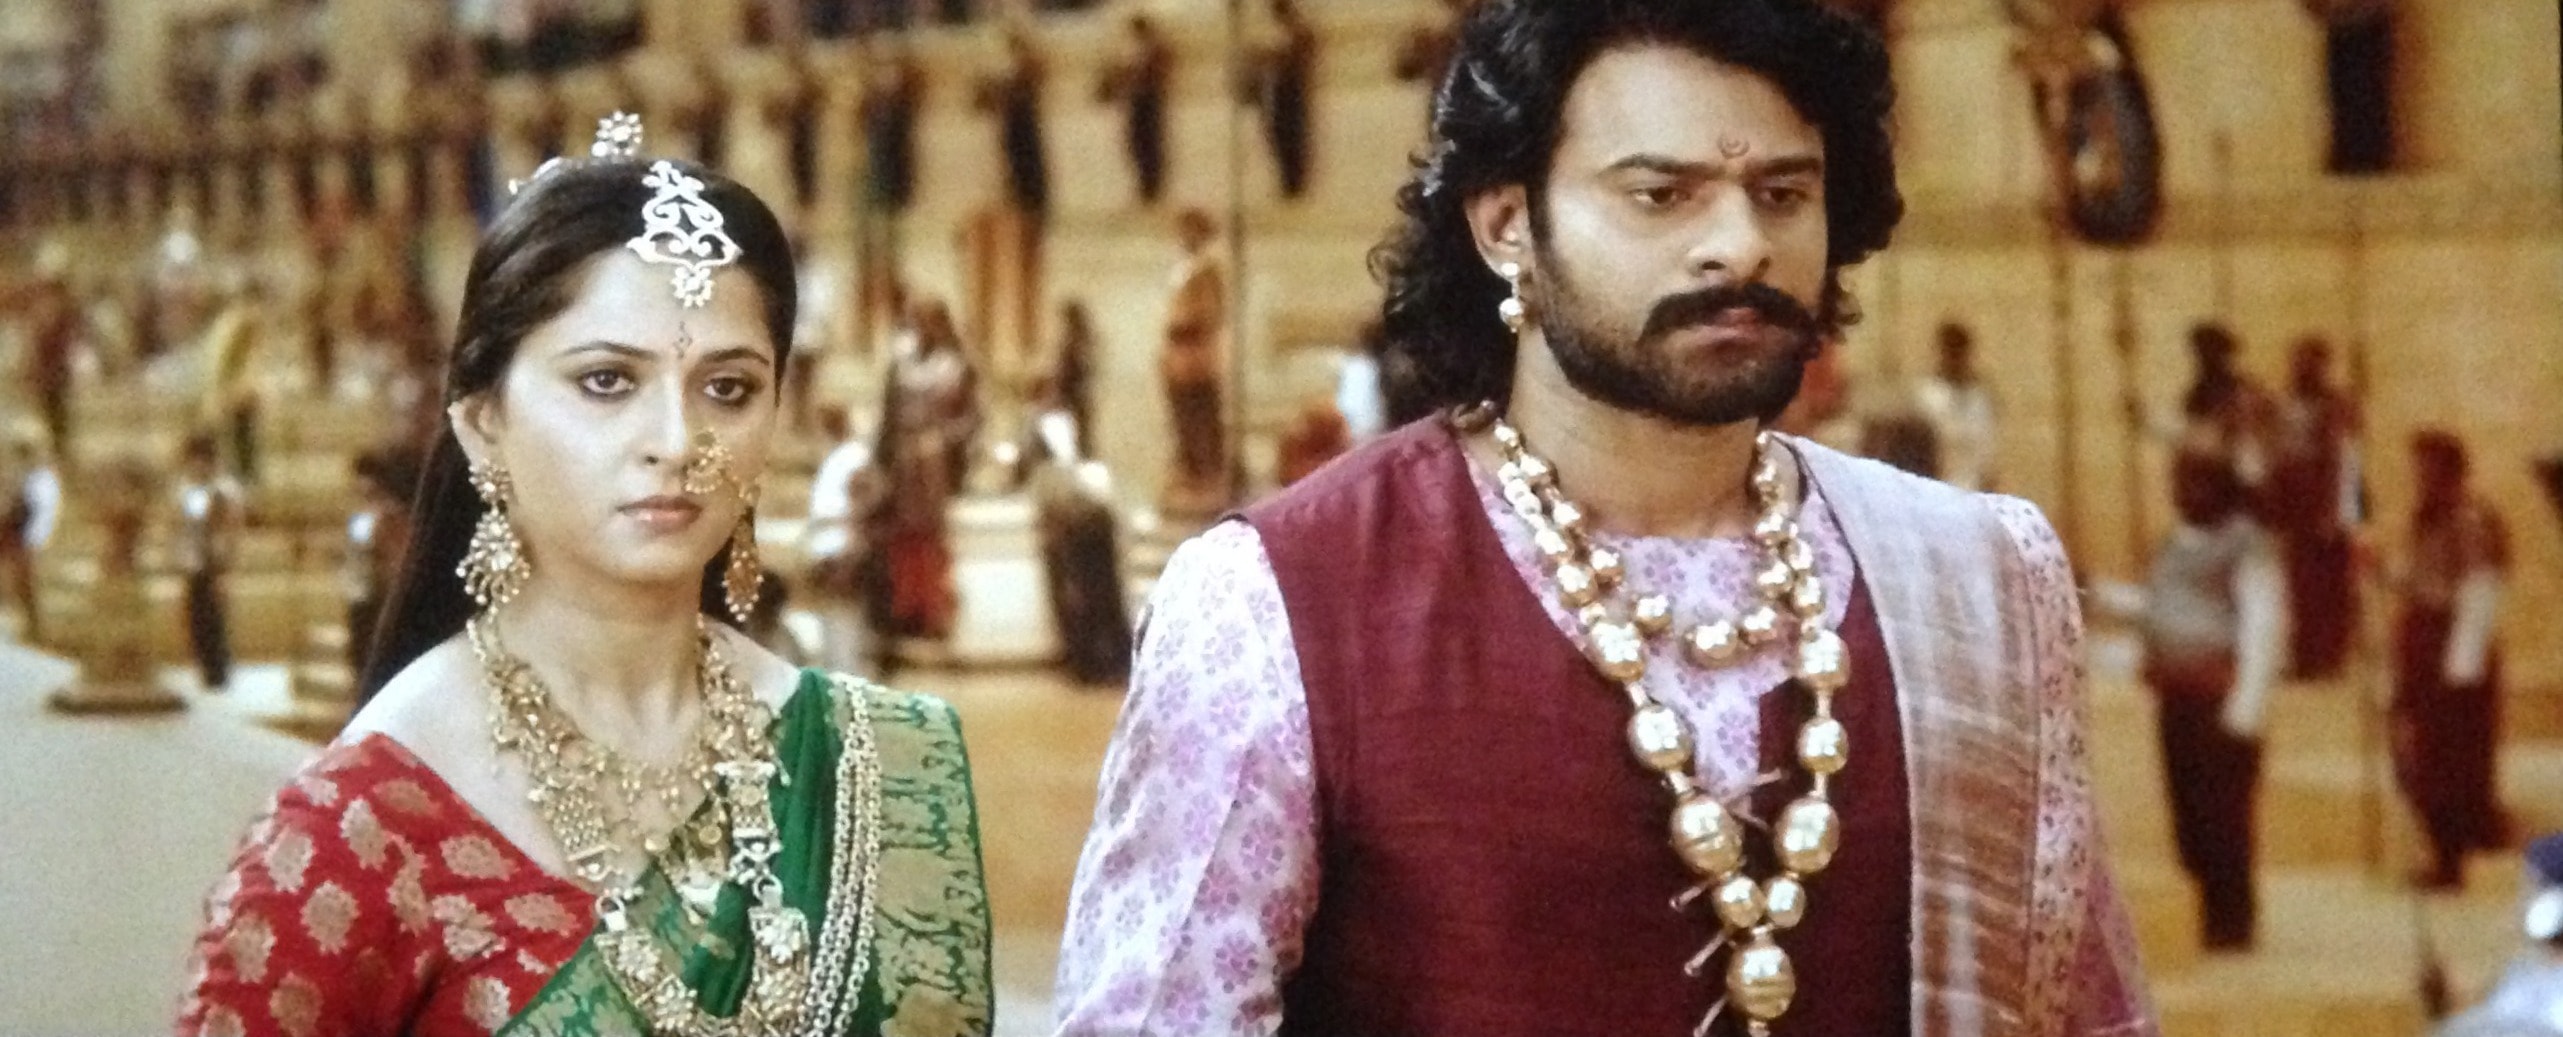 Anushka and Prabhas in Bahubali 2